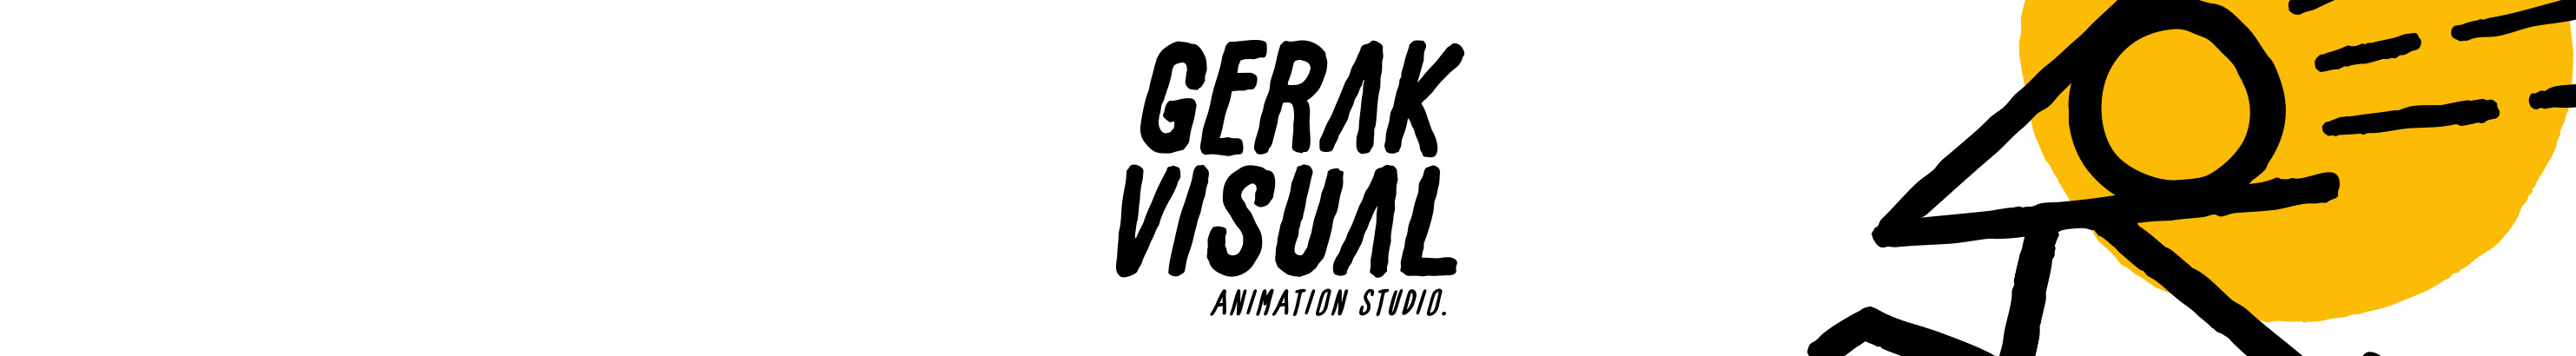 GerakVisual Studio's profile banner